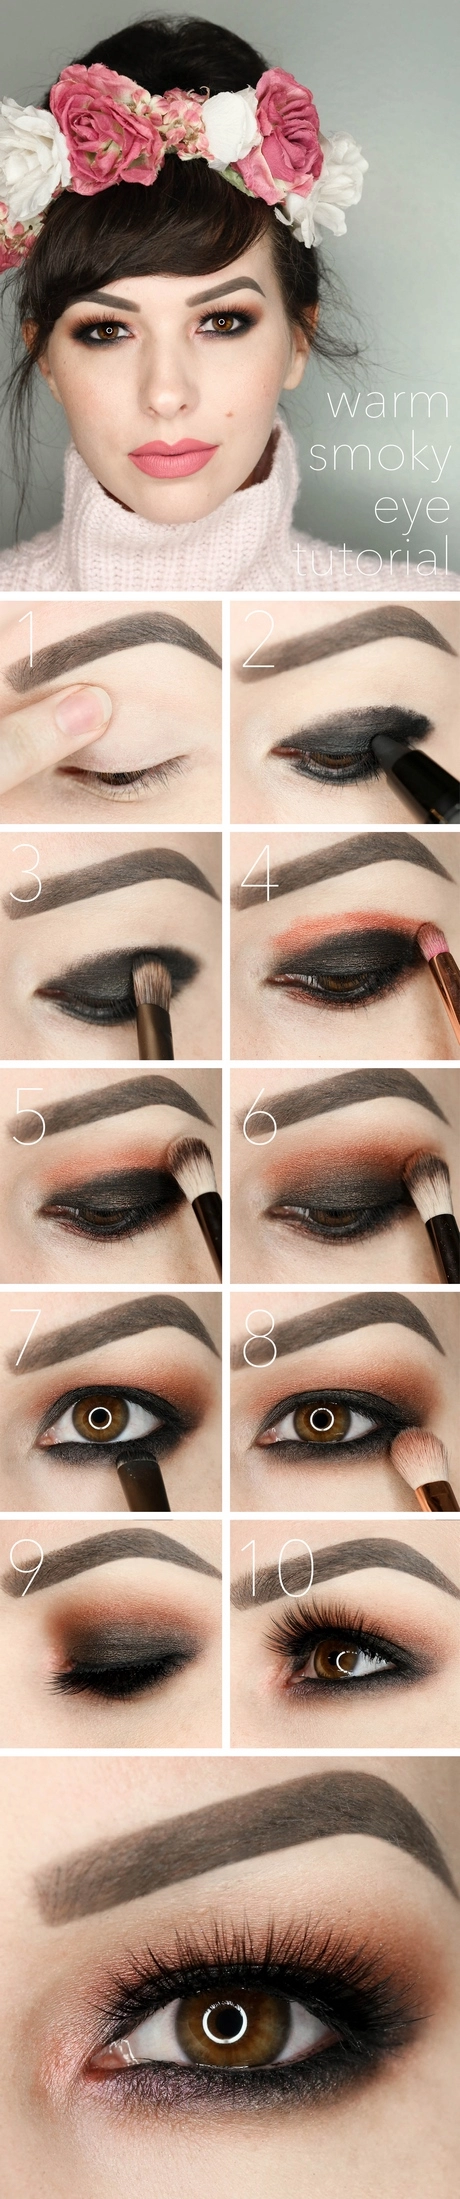 how-to-do-smokey-eye-makeup-step-by-step-39_16-8 Hoe maak je smokey eye make-up stap voor stap